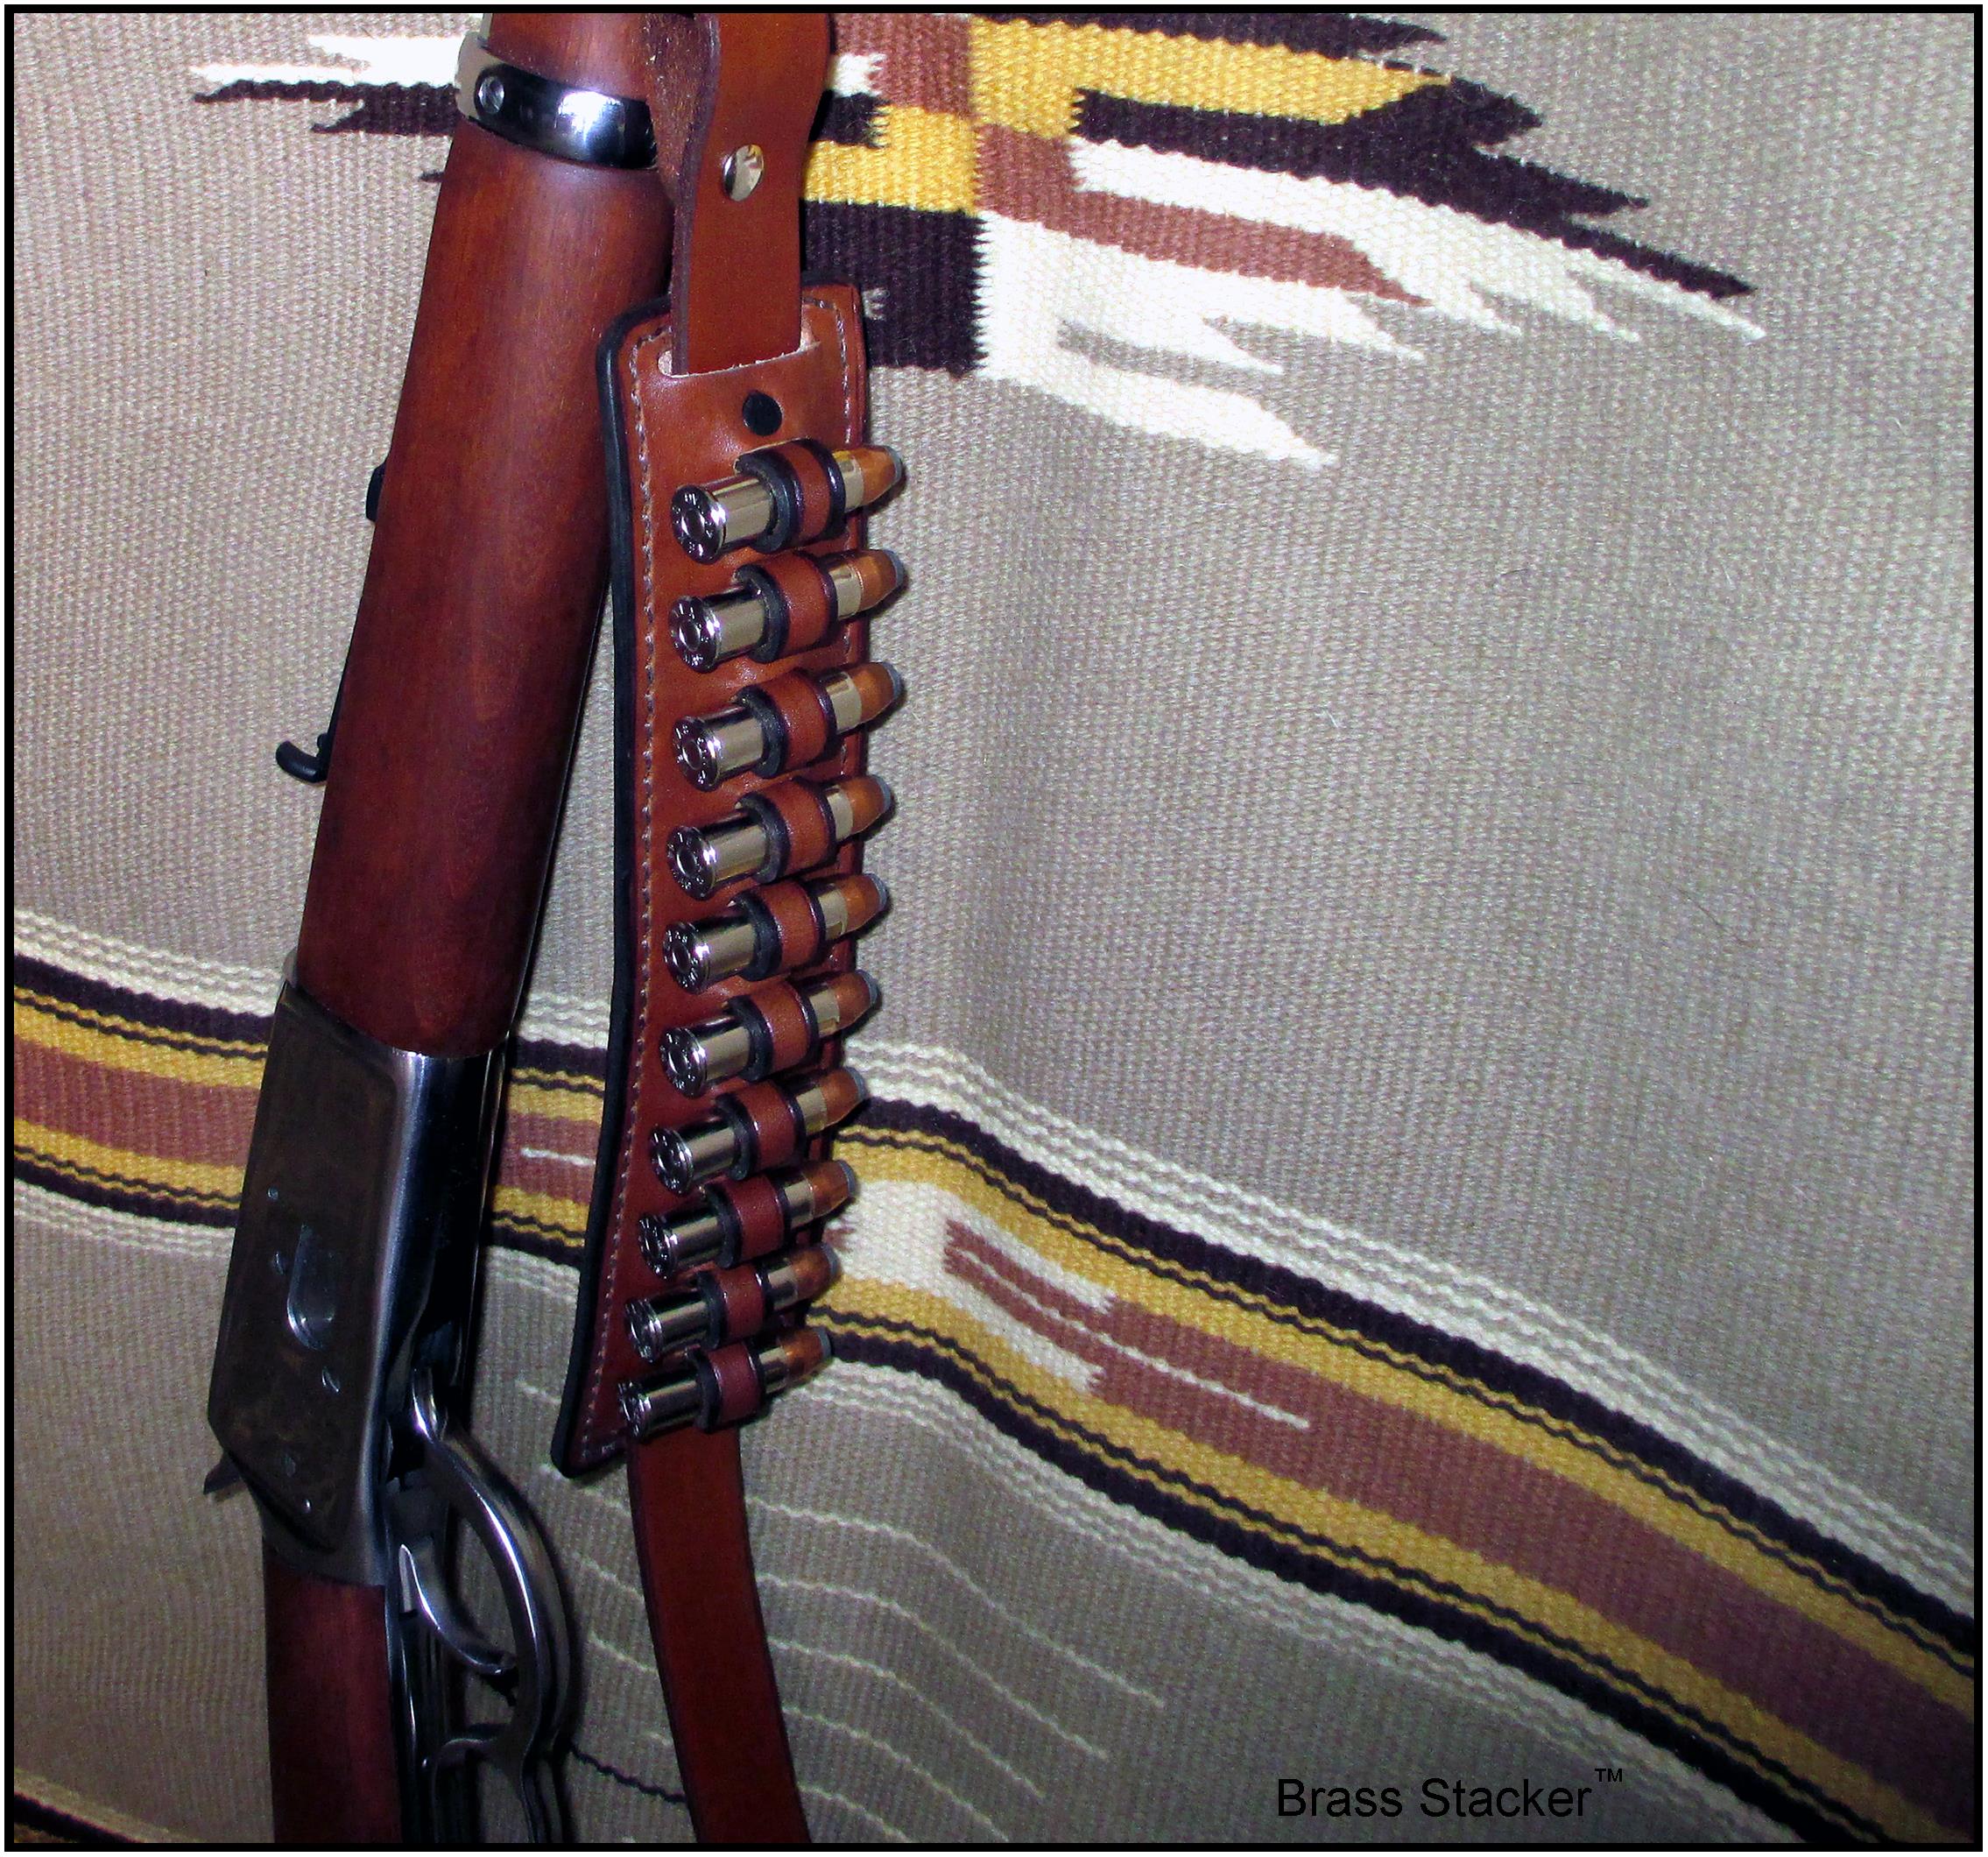 Brass Stacker™ RLO Rifle Sling & Cartridge Bandolier